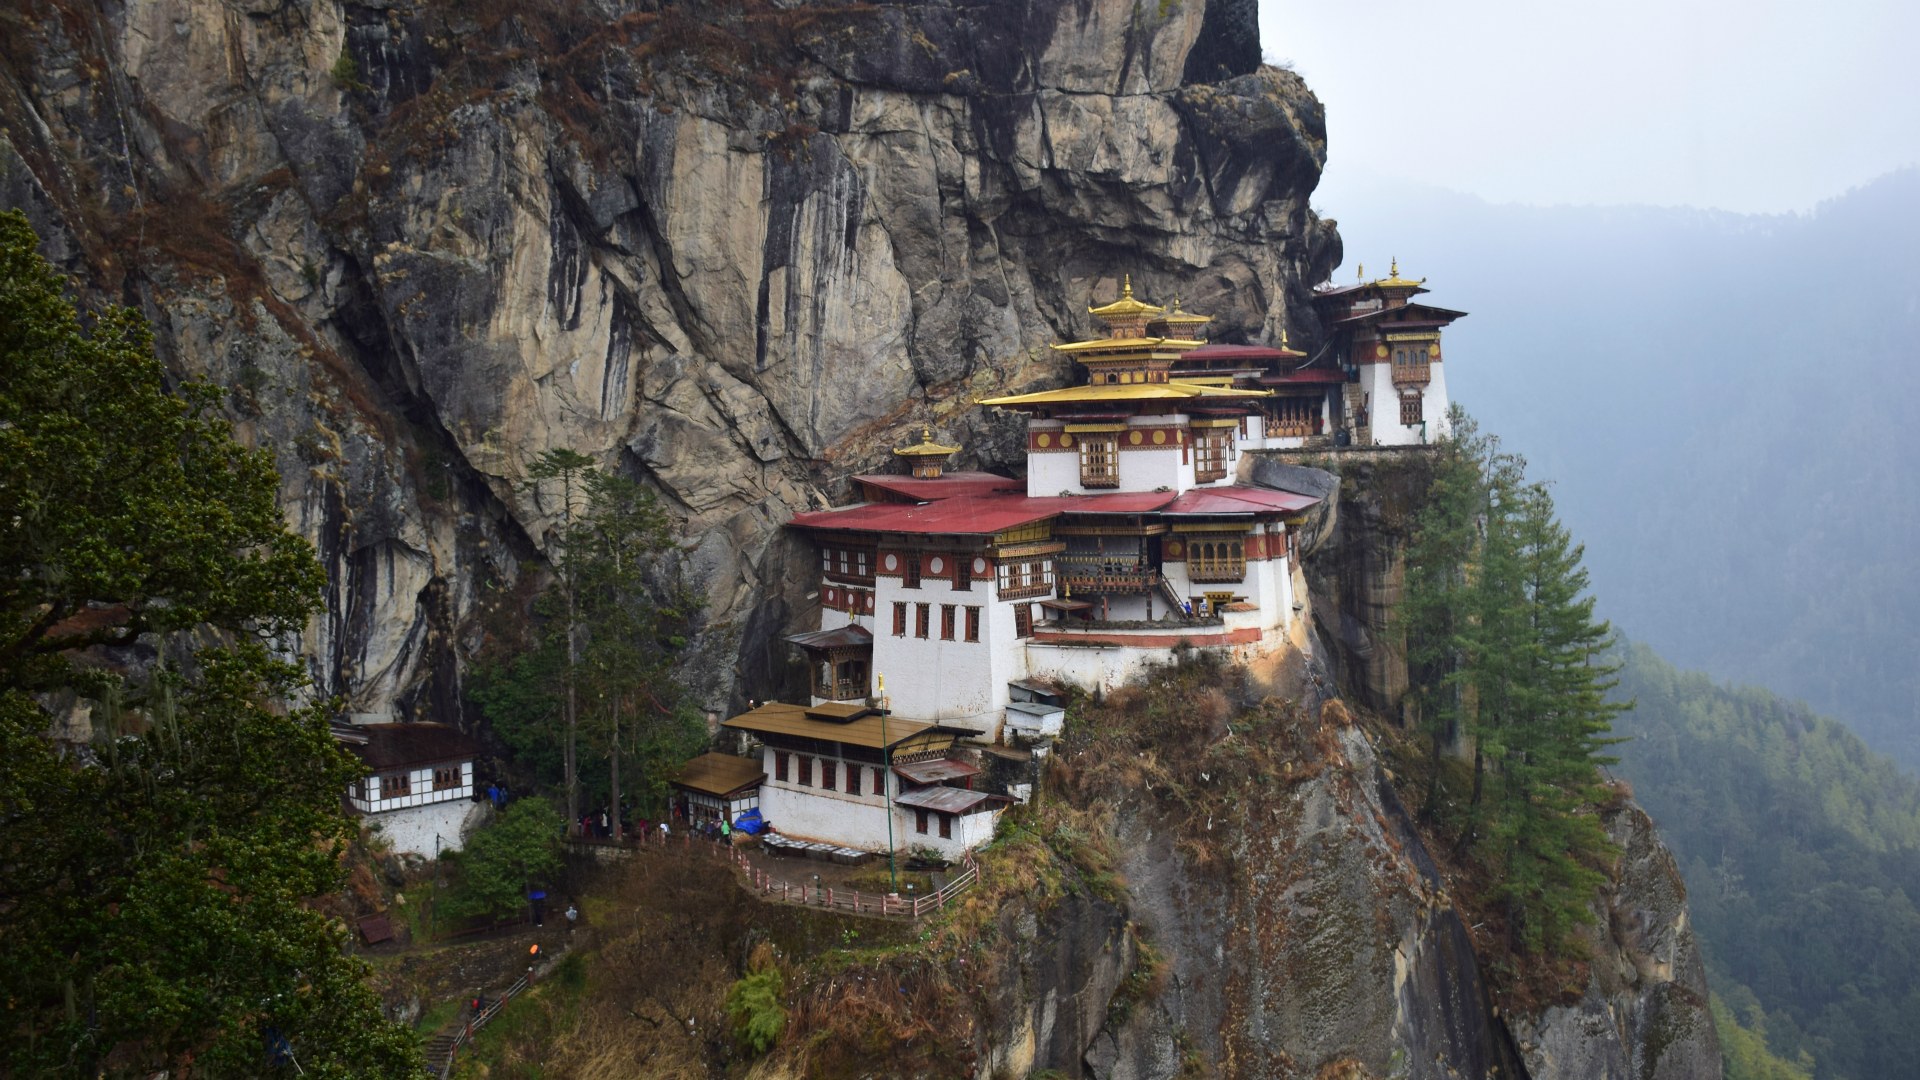 Taktsang Monastery (Tiger's Nest), Paro Valley